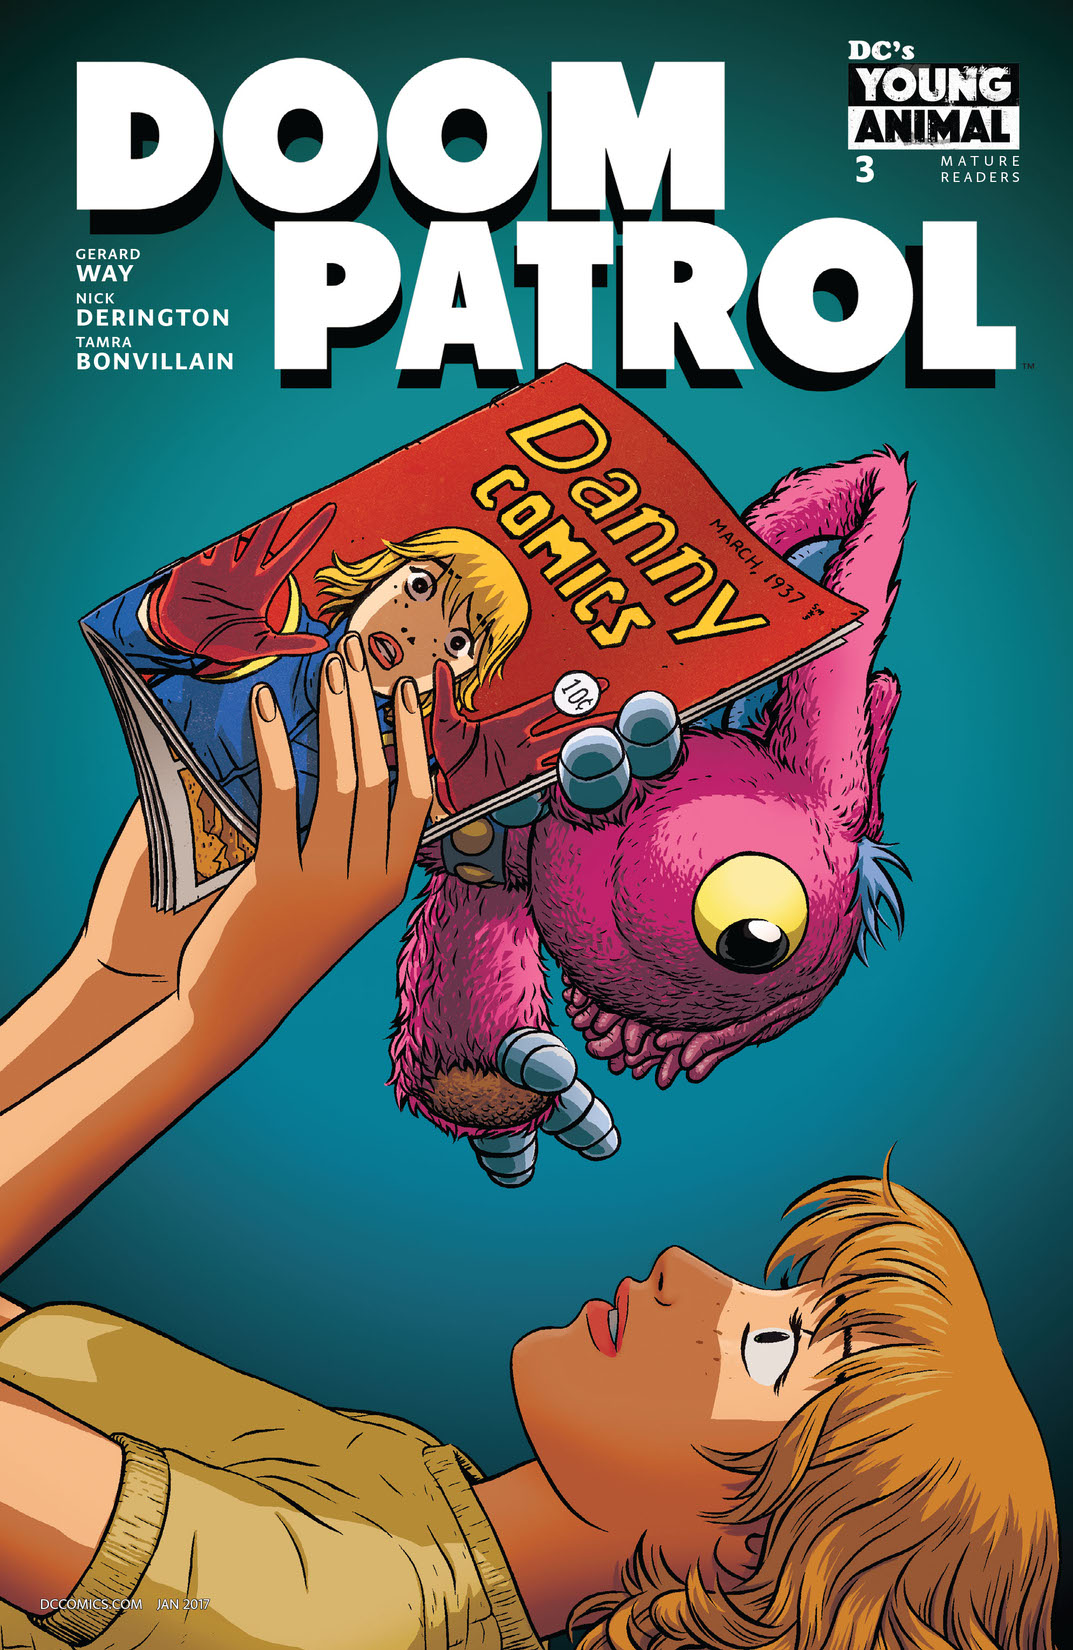 Doom Patrol (2016-) #3 preview images